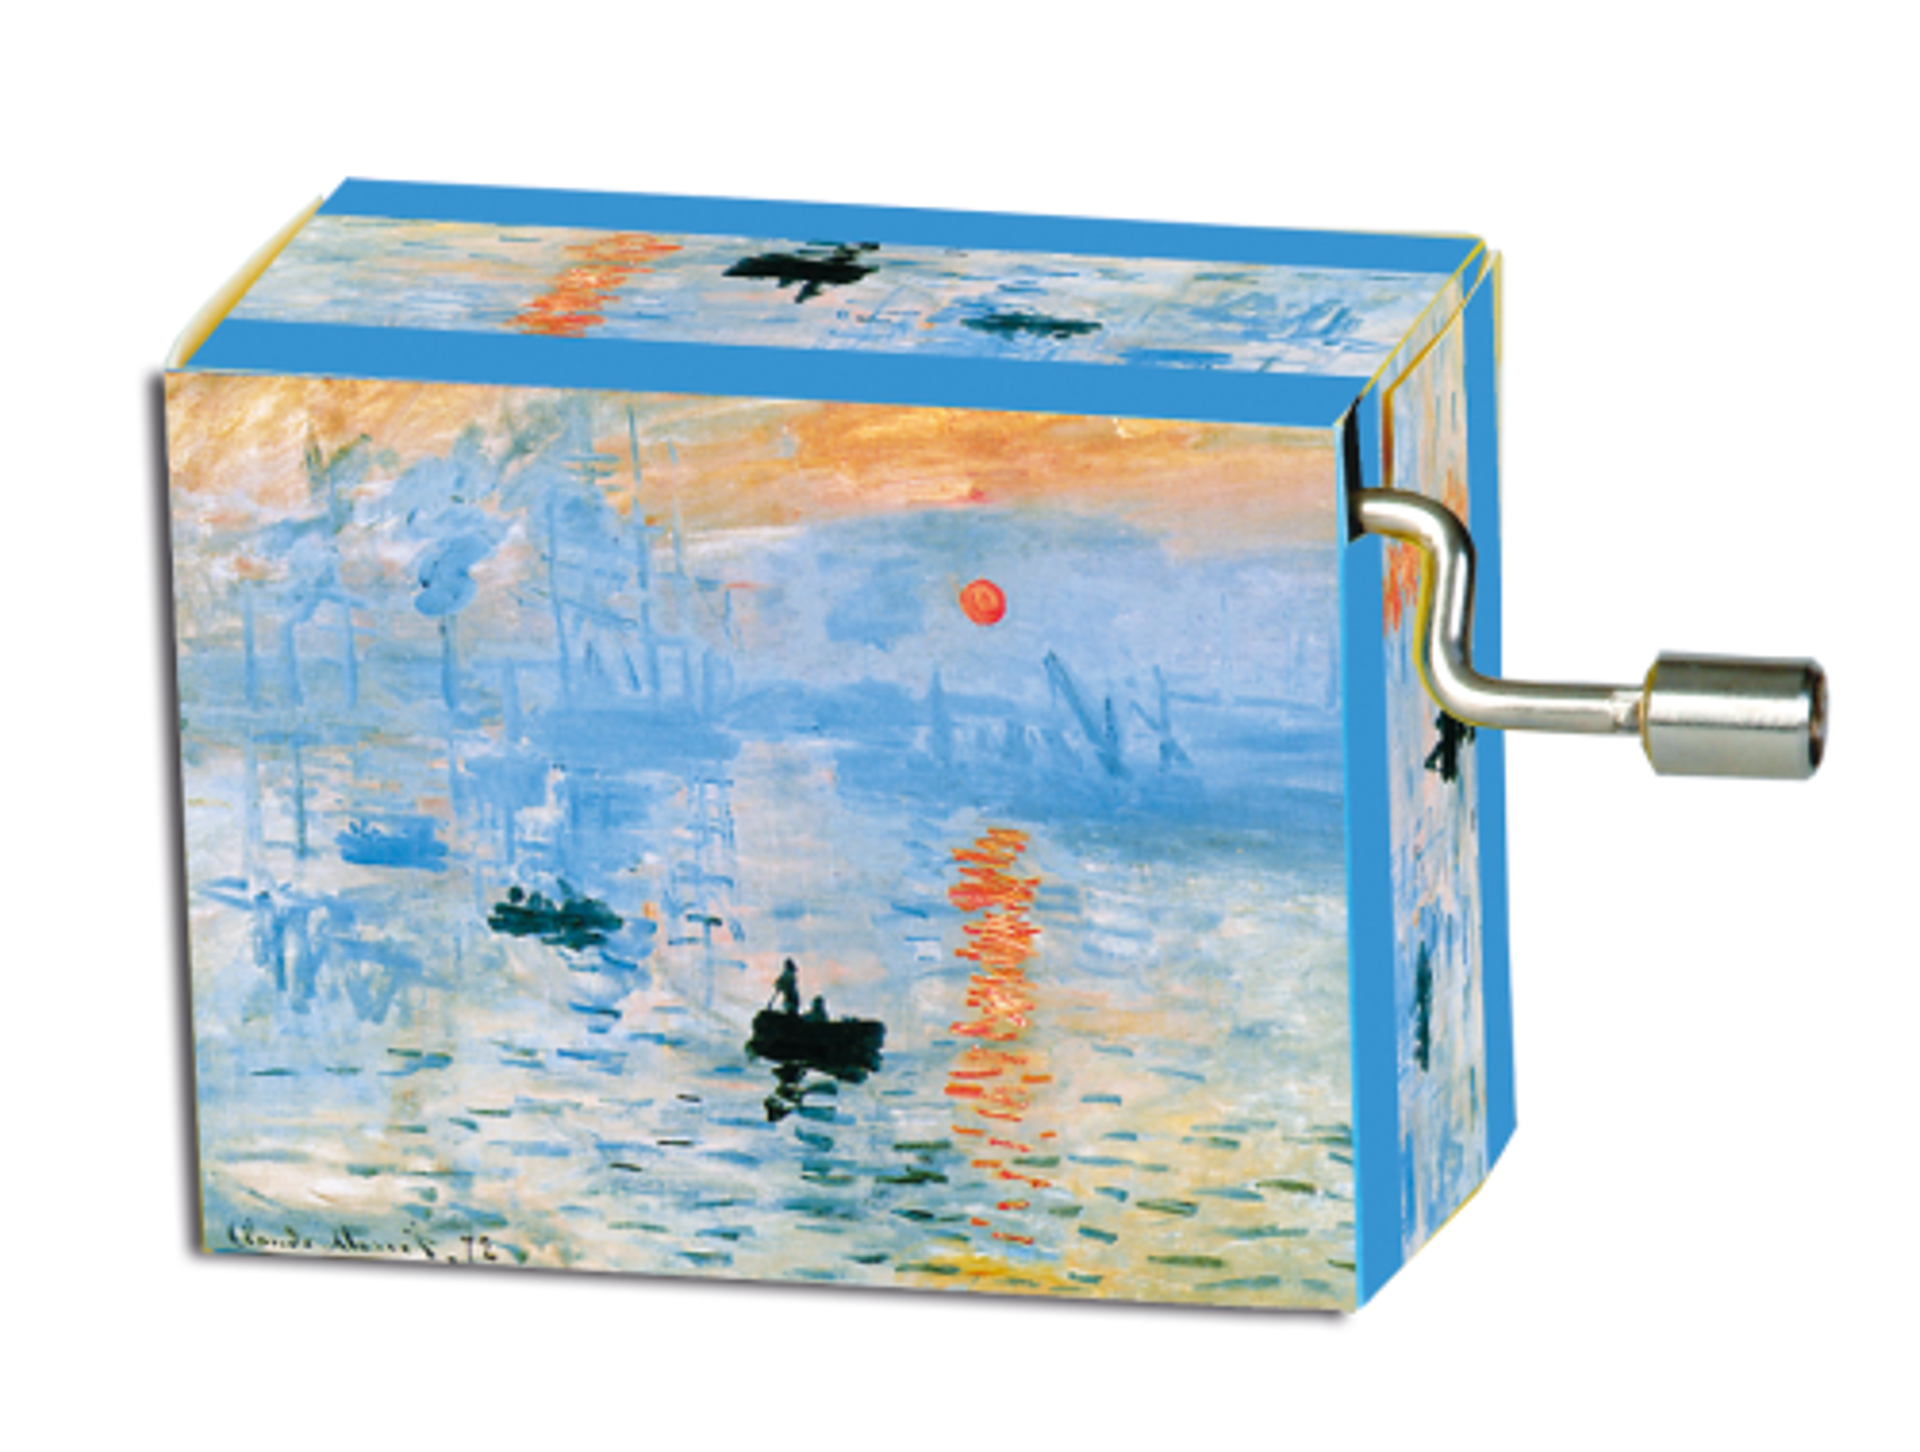 Music Box - Monet, Beethoven by Chauvet Arts